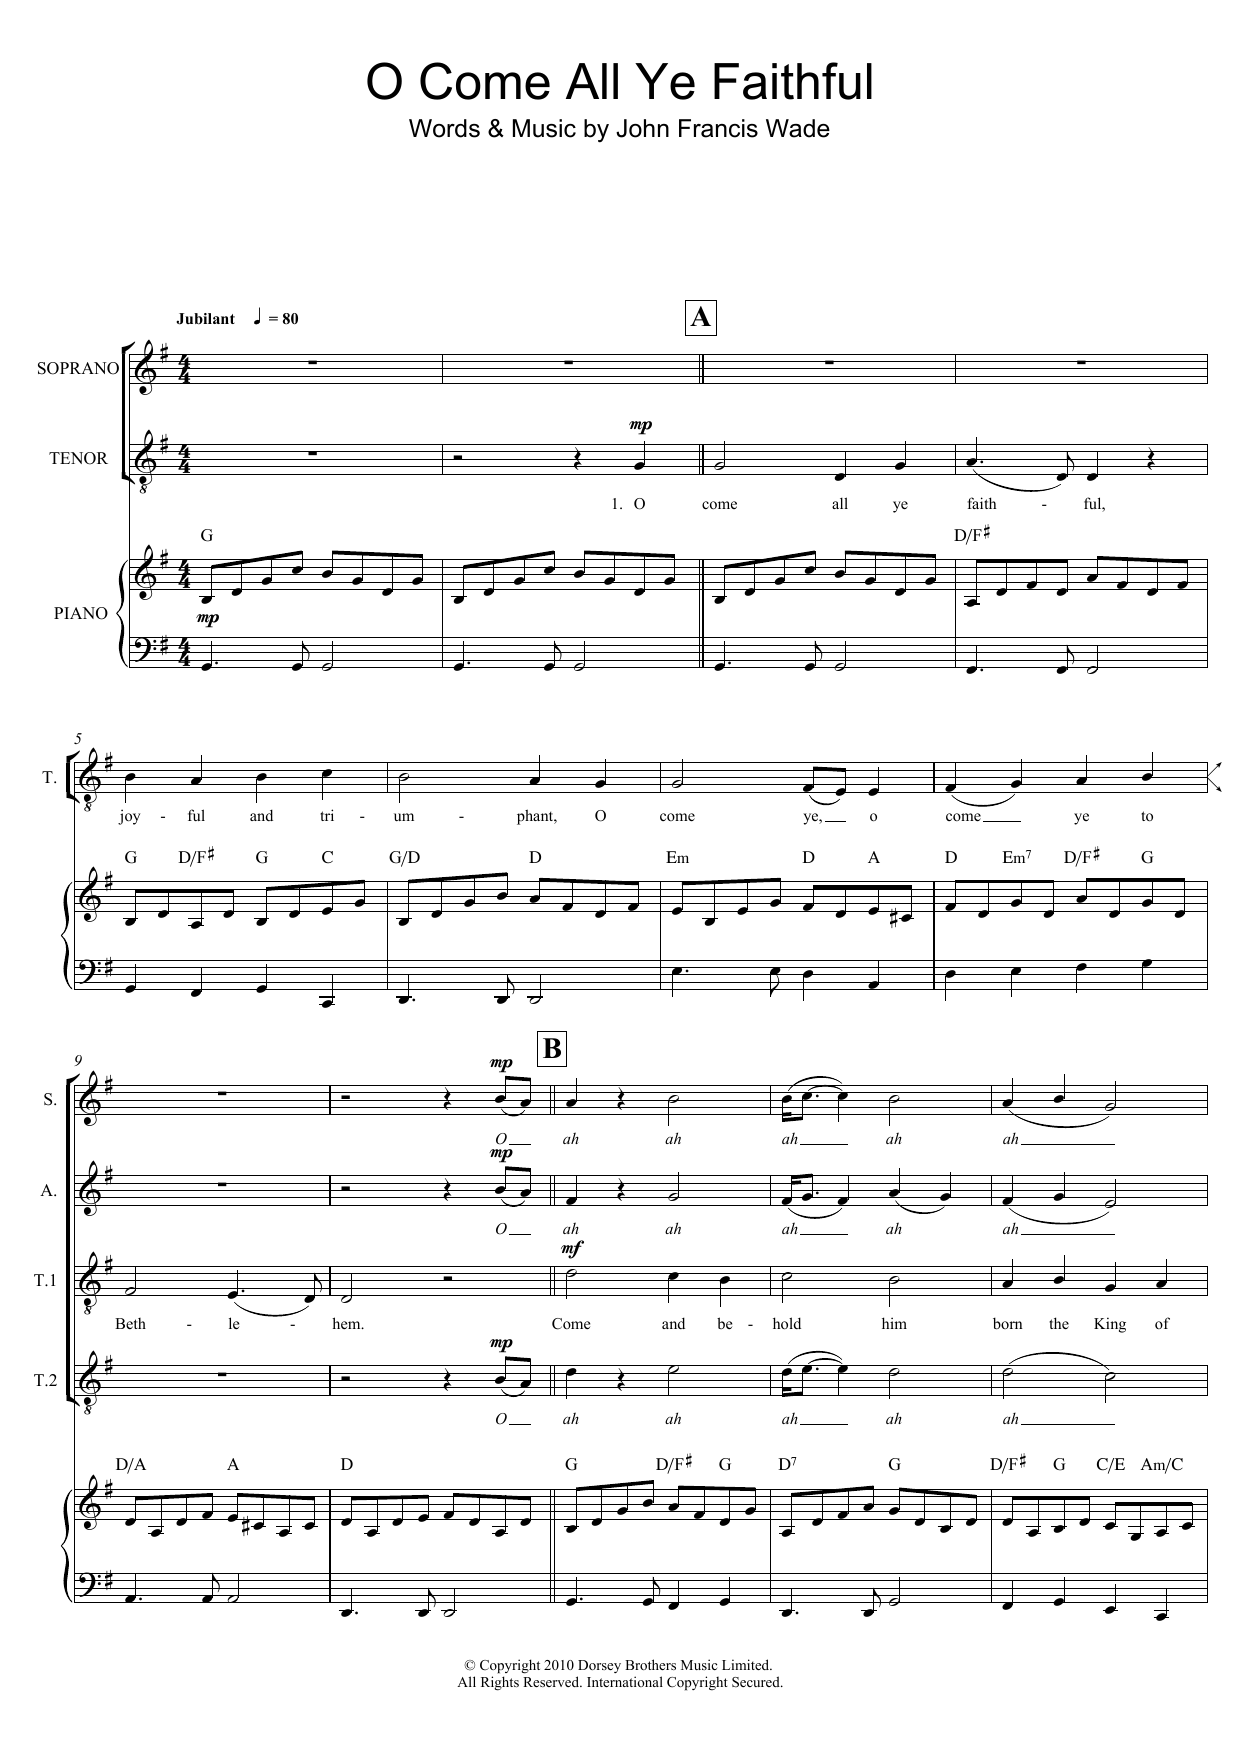 Christmas Carol O Come All Ye Faithful (arr. Mark De-Lisser) Sheet Music Notes & Chords for SAT - Download or Print PDF